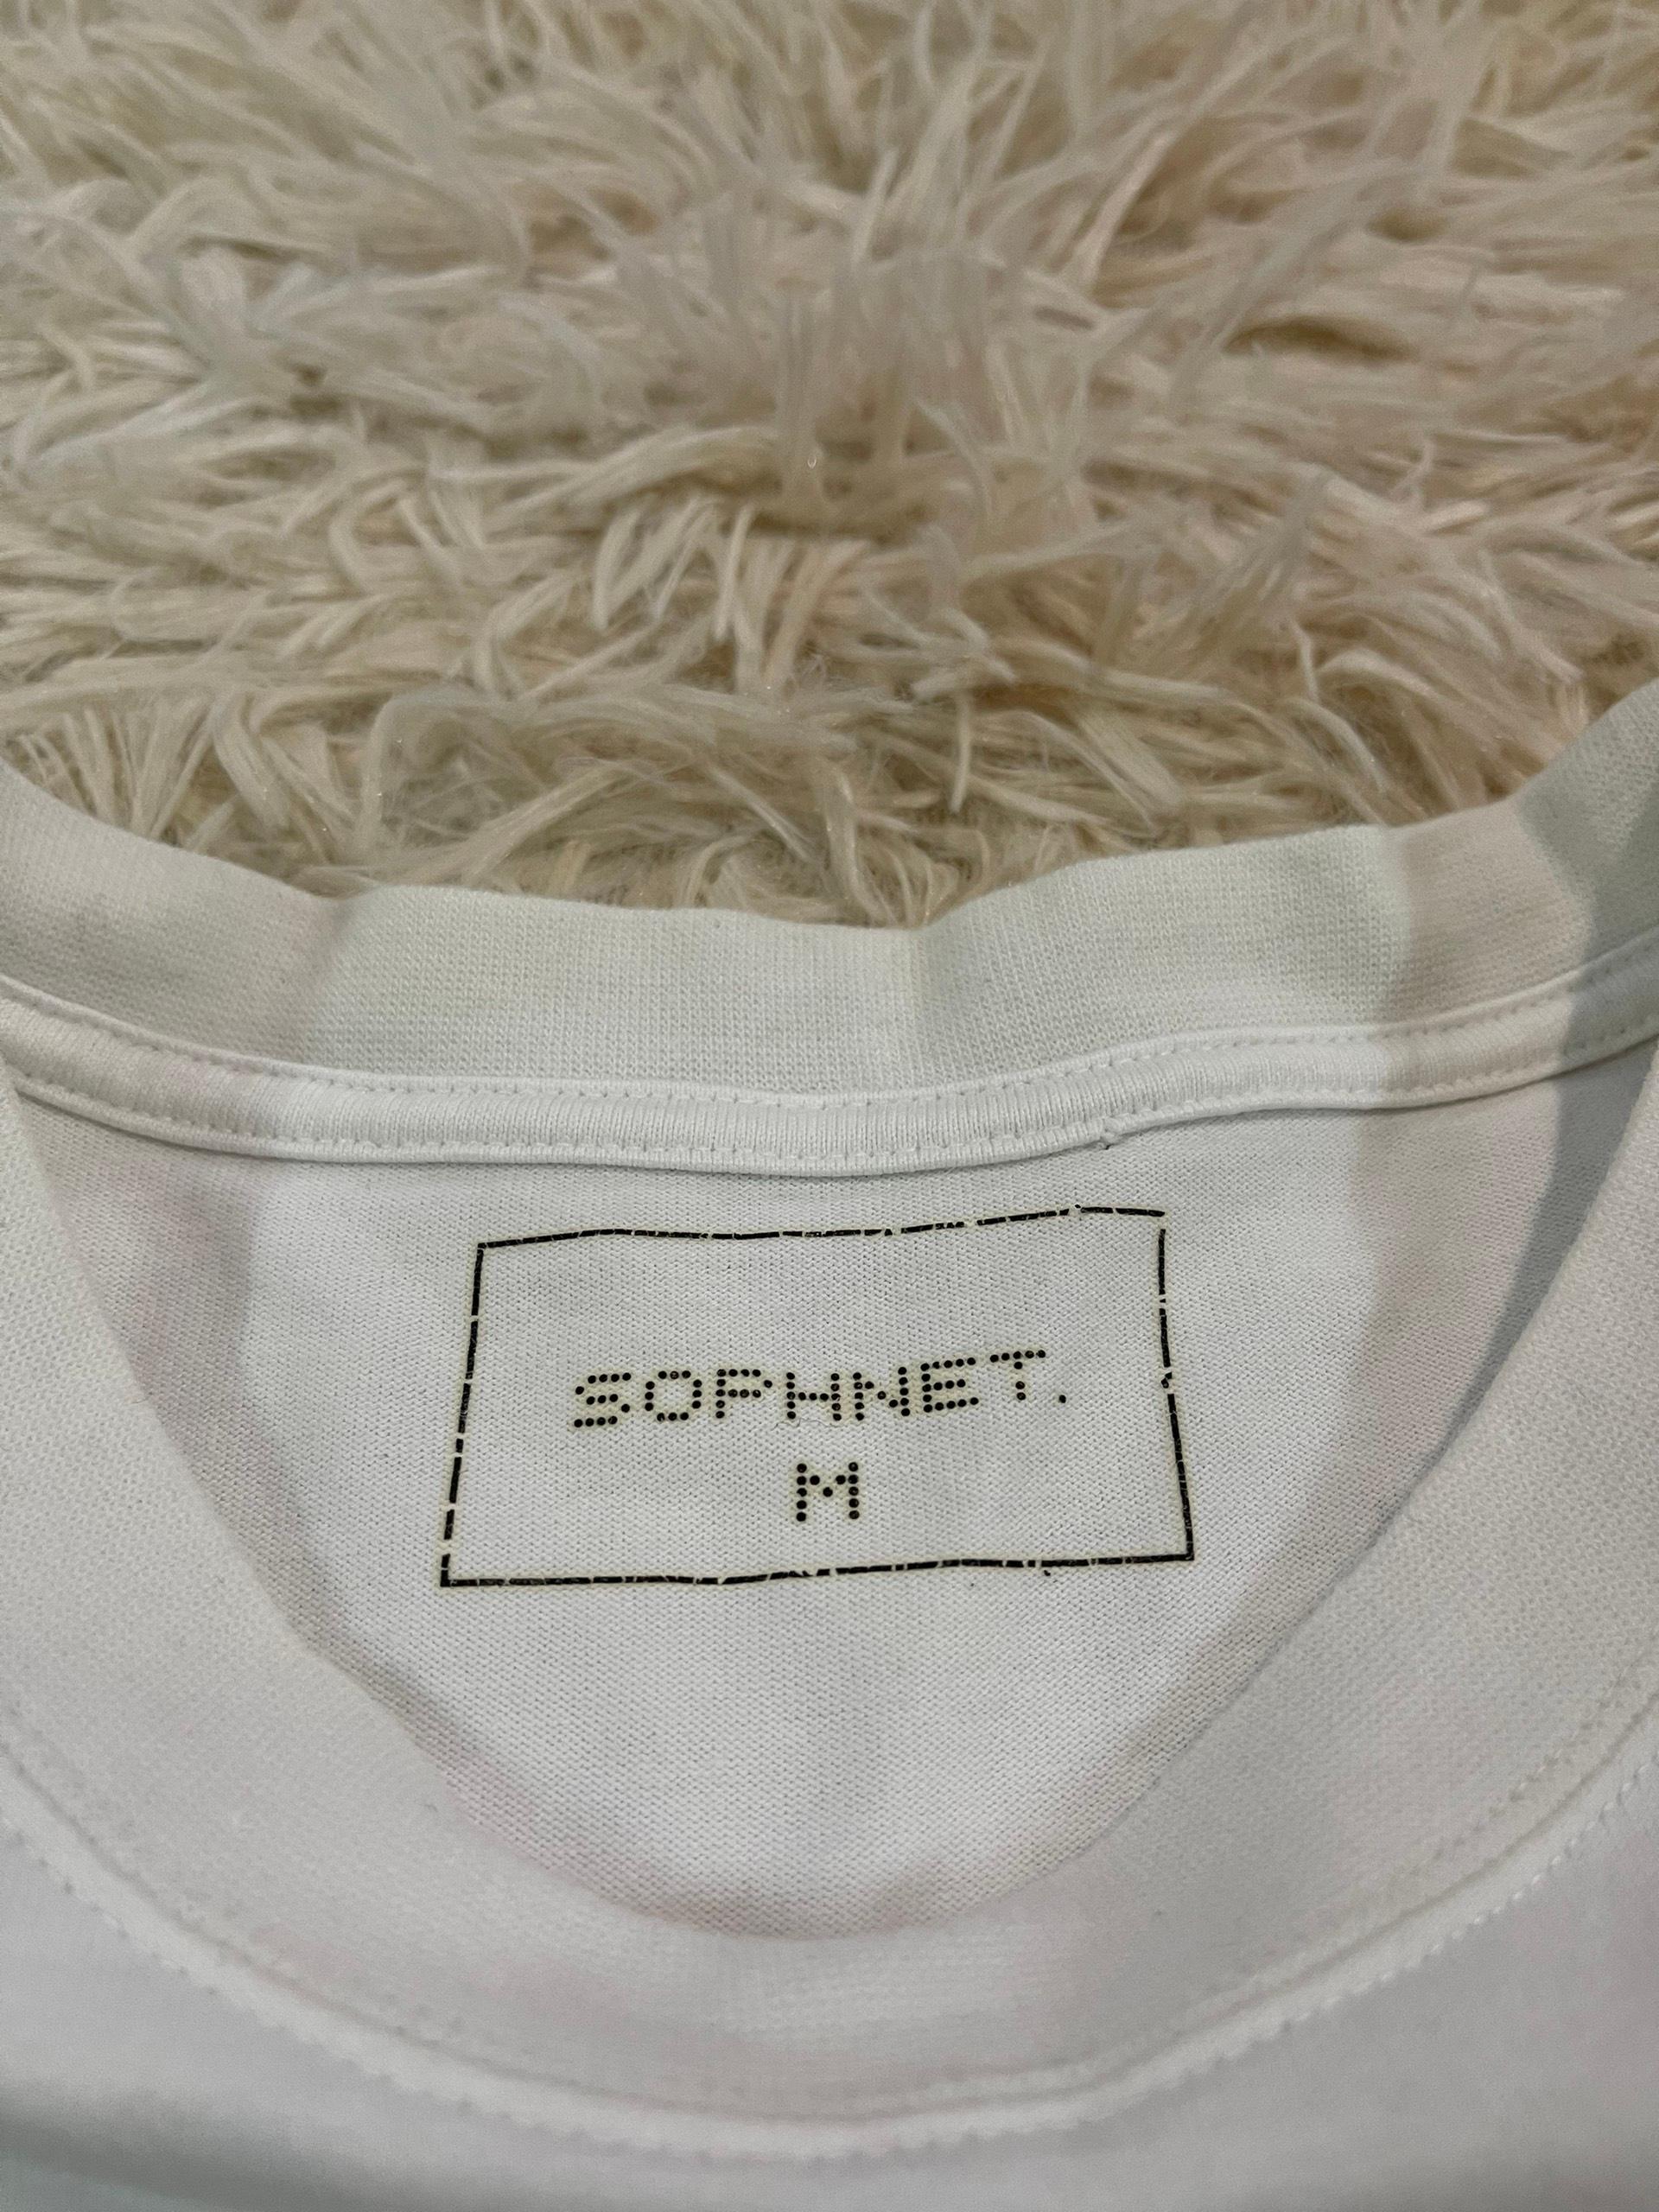 Sophnet S/S2016 